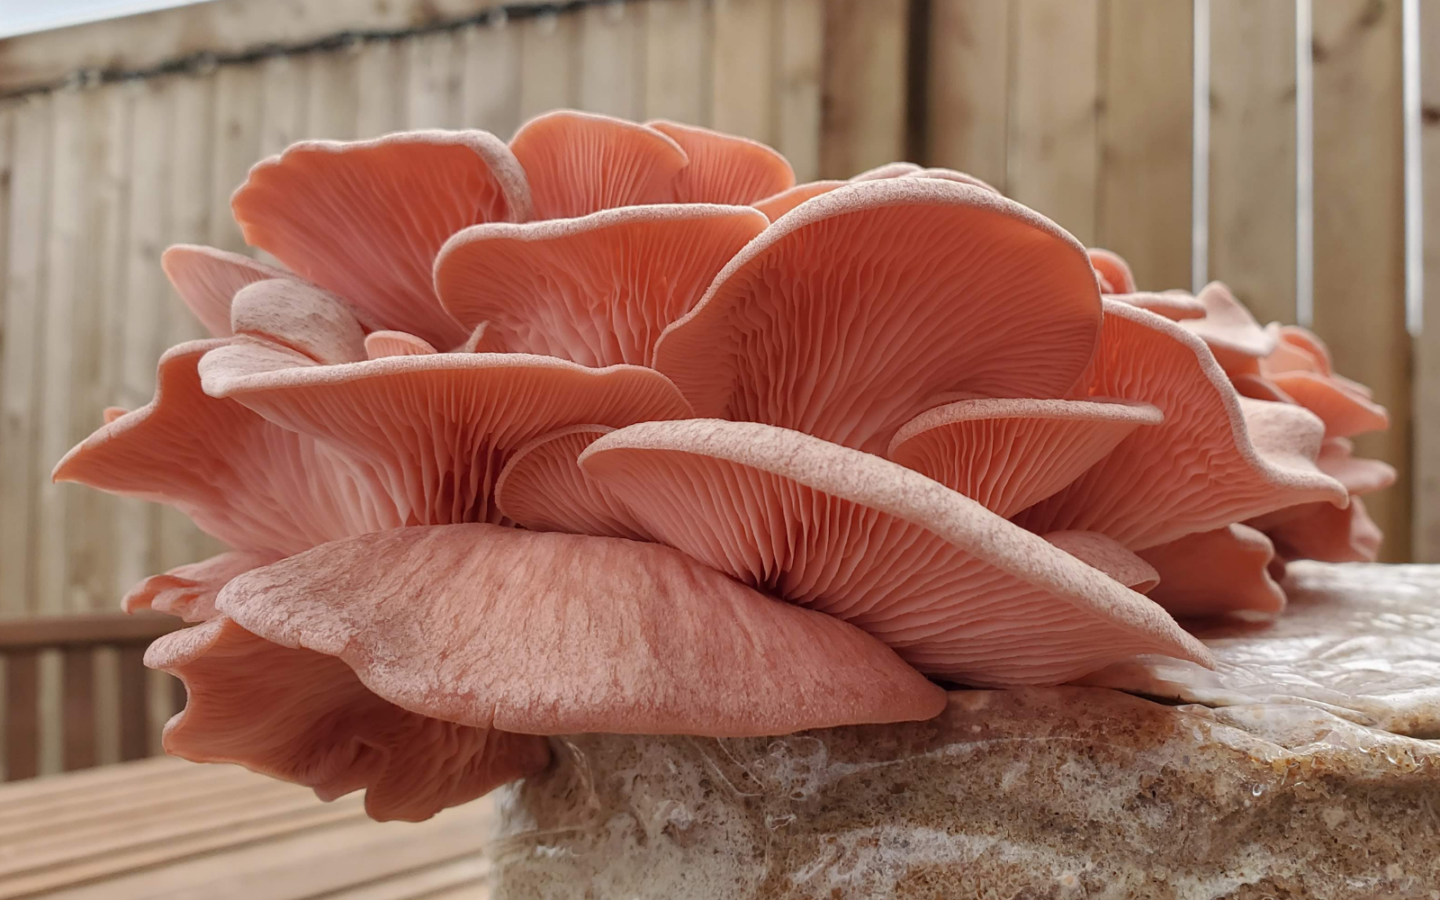 How To Grow Mushrooms on Straw - FreshCap Mushrooms